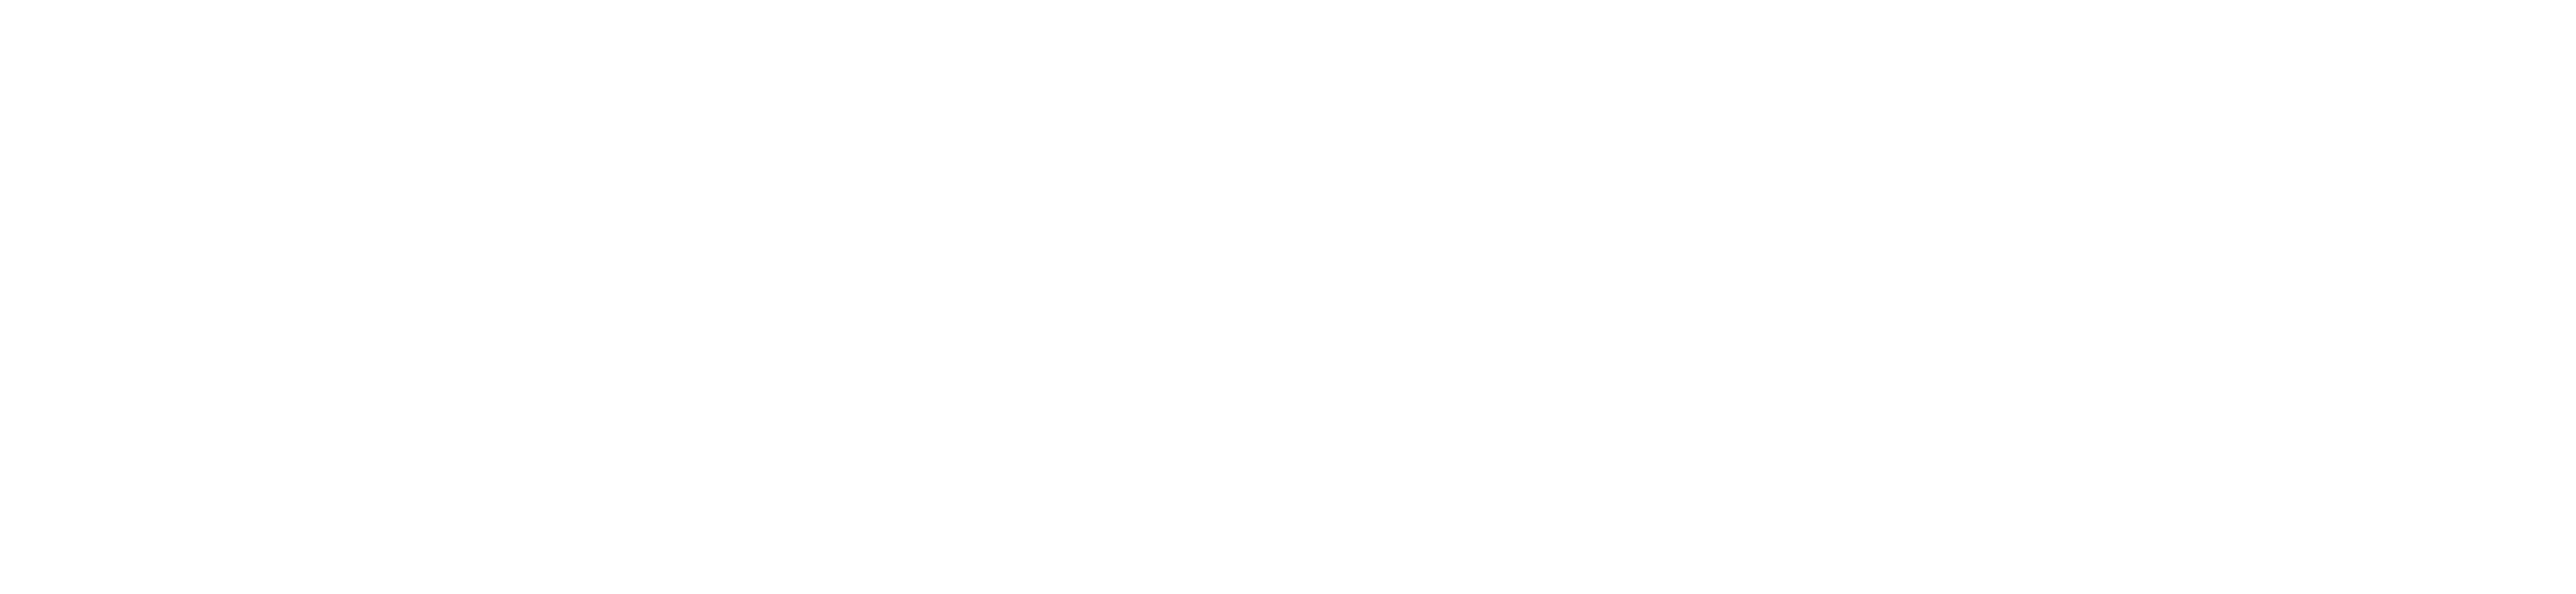 Boris Karloff: The Man Behind the Monster